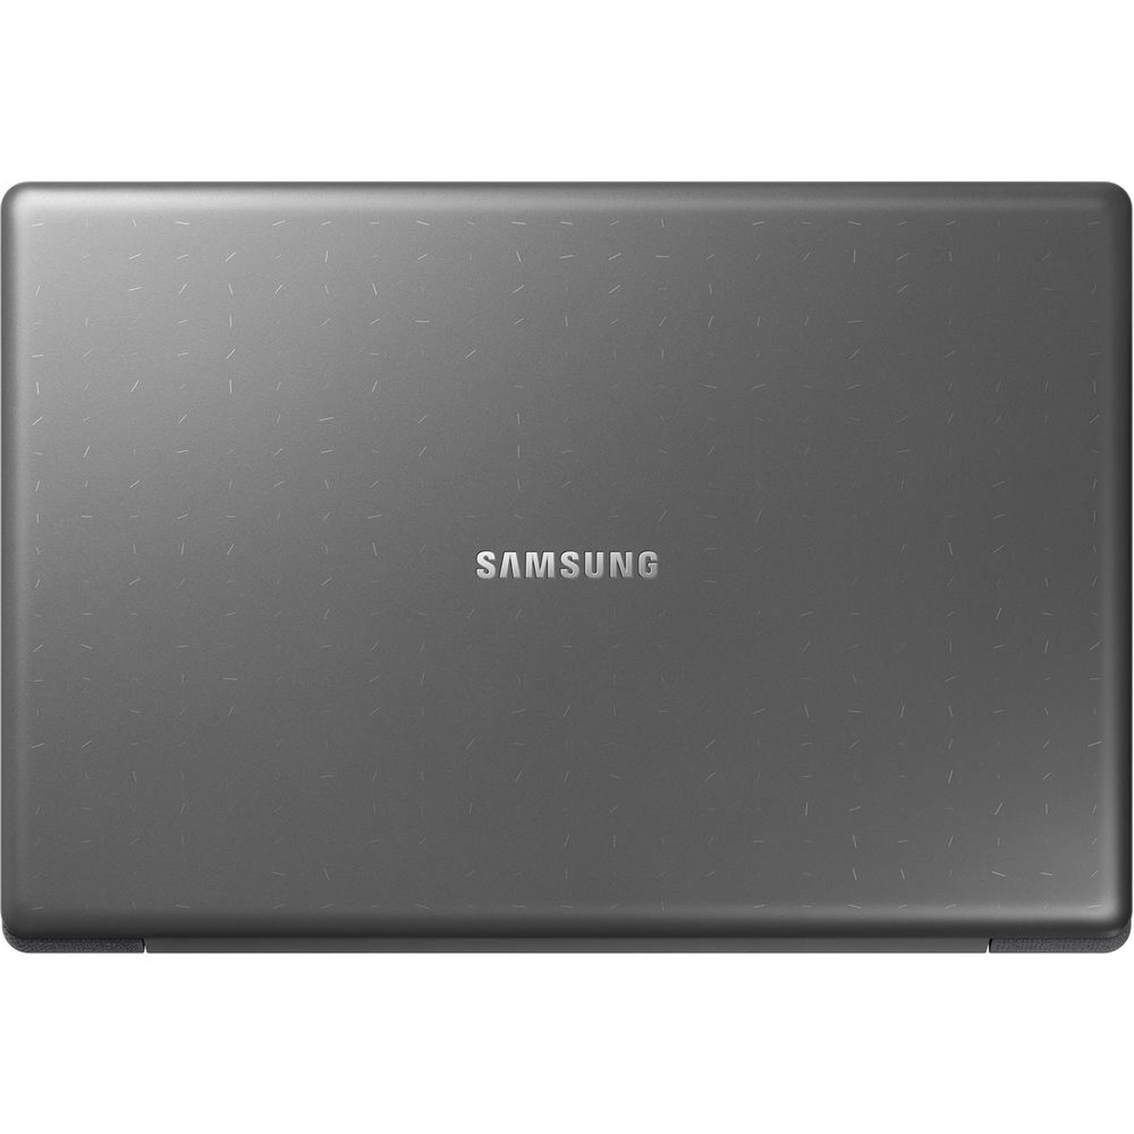 Samsung Notebook Flash - Image 5 of 9